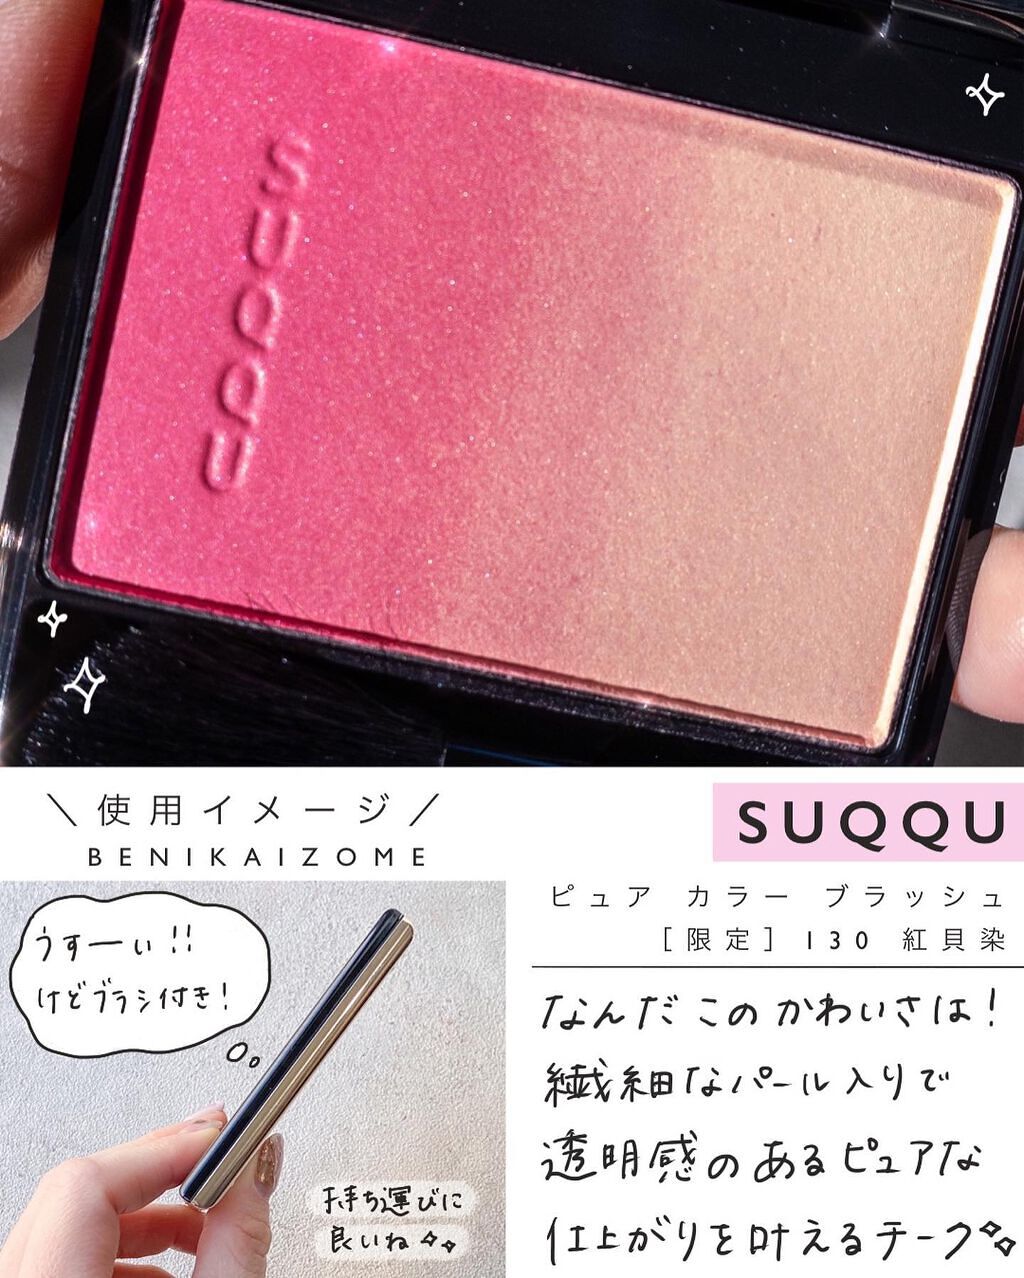 SUQQU ピュア カラー ブラッシュ 新品未使用 限定色